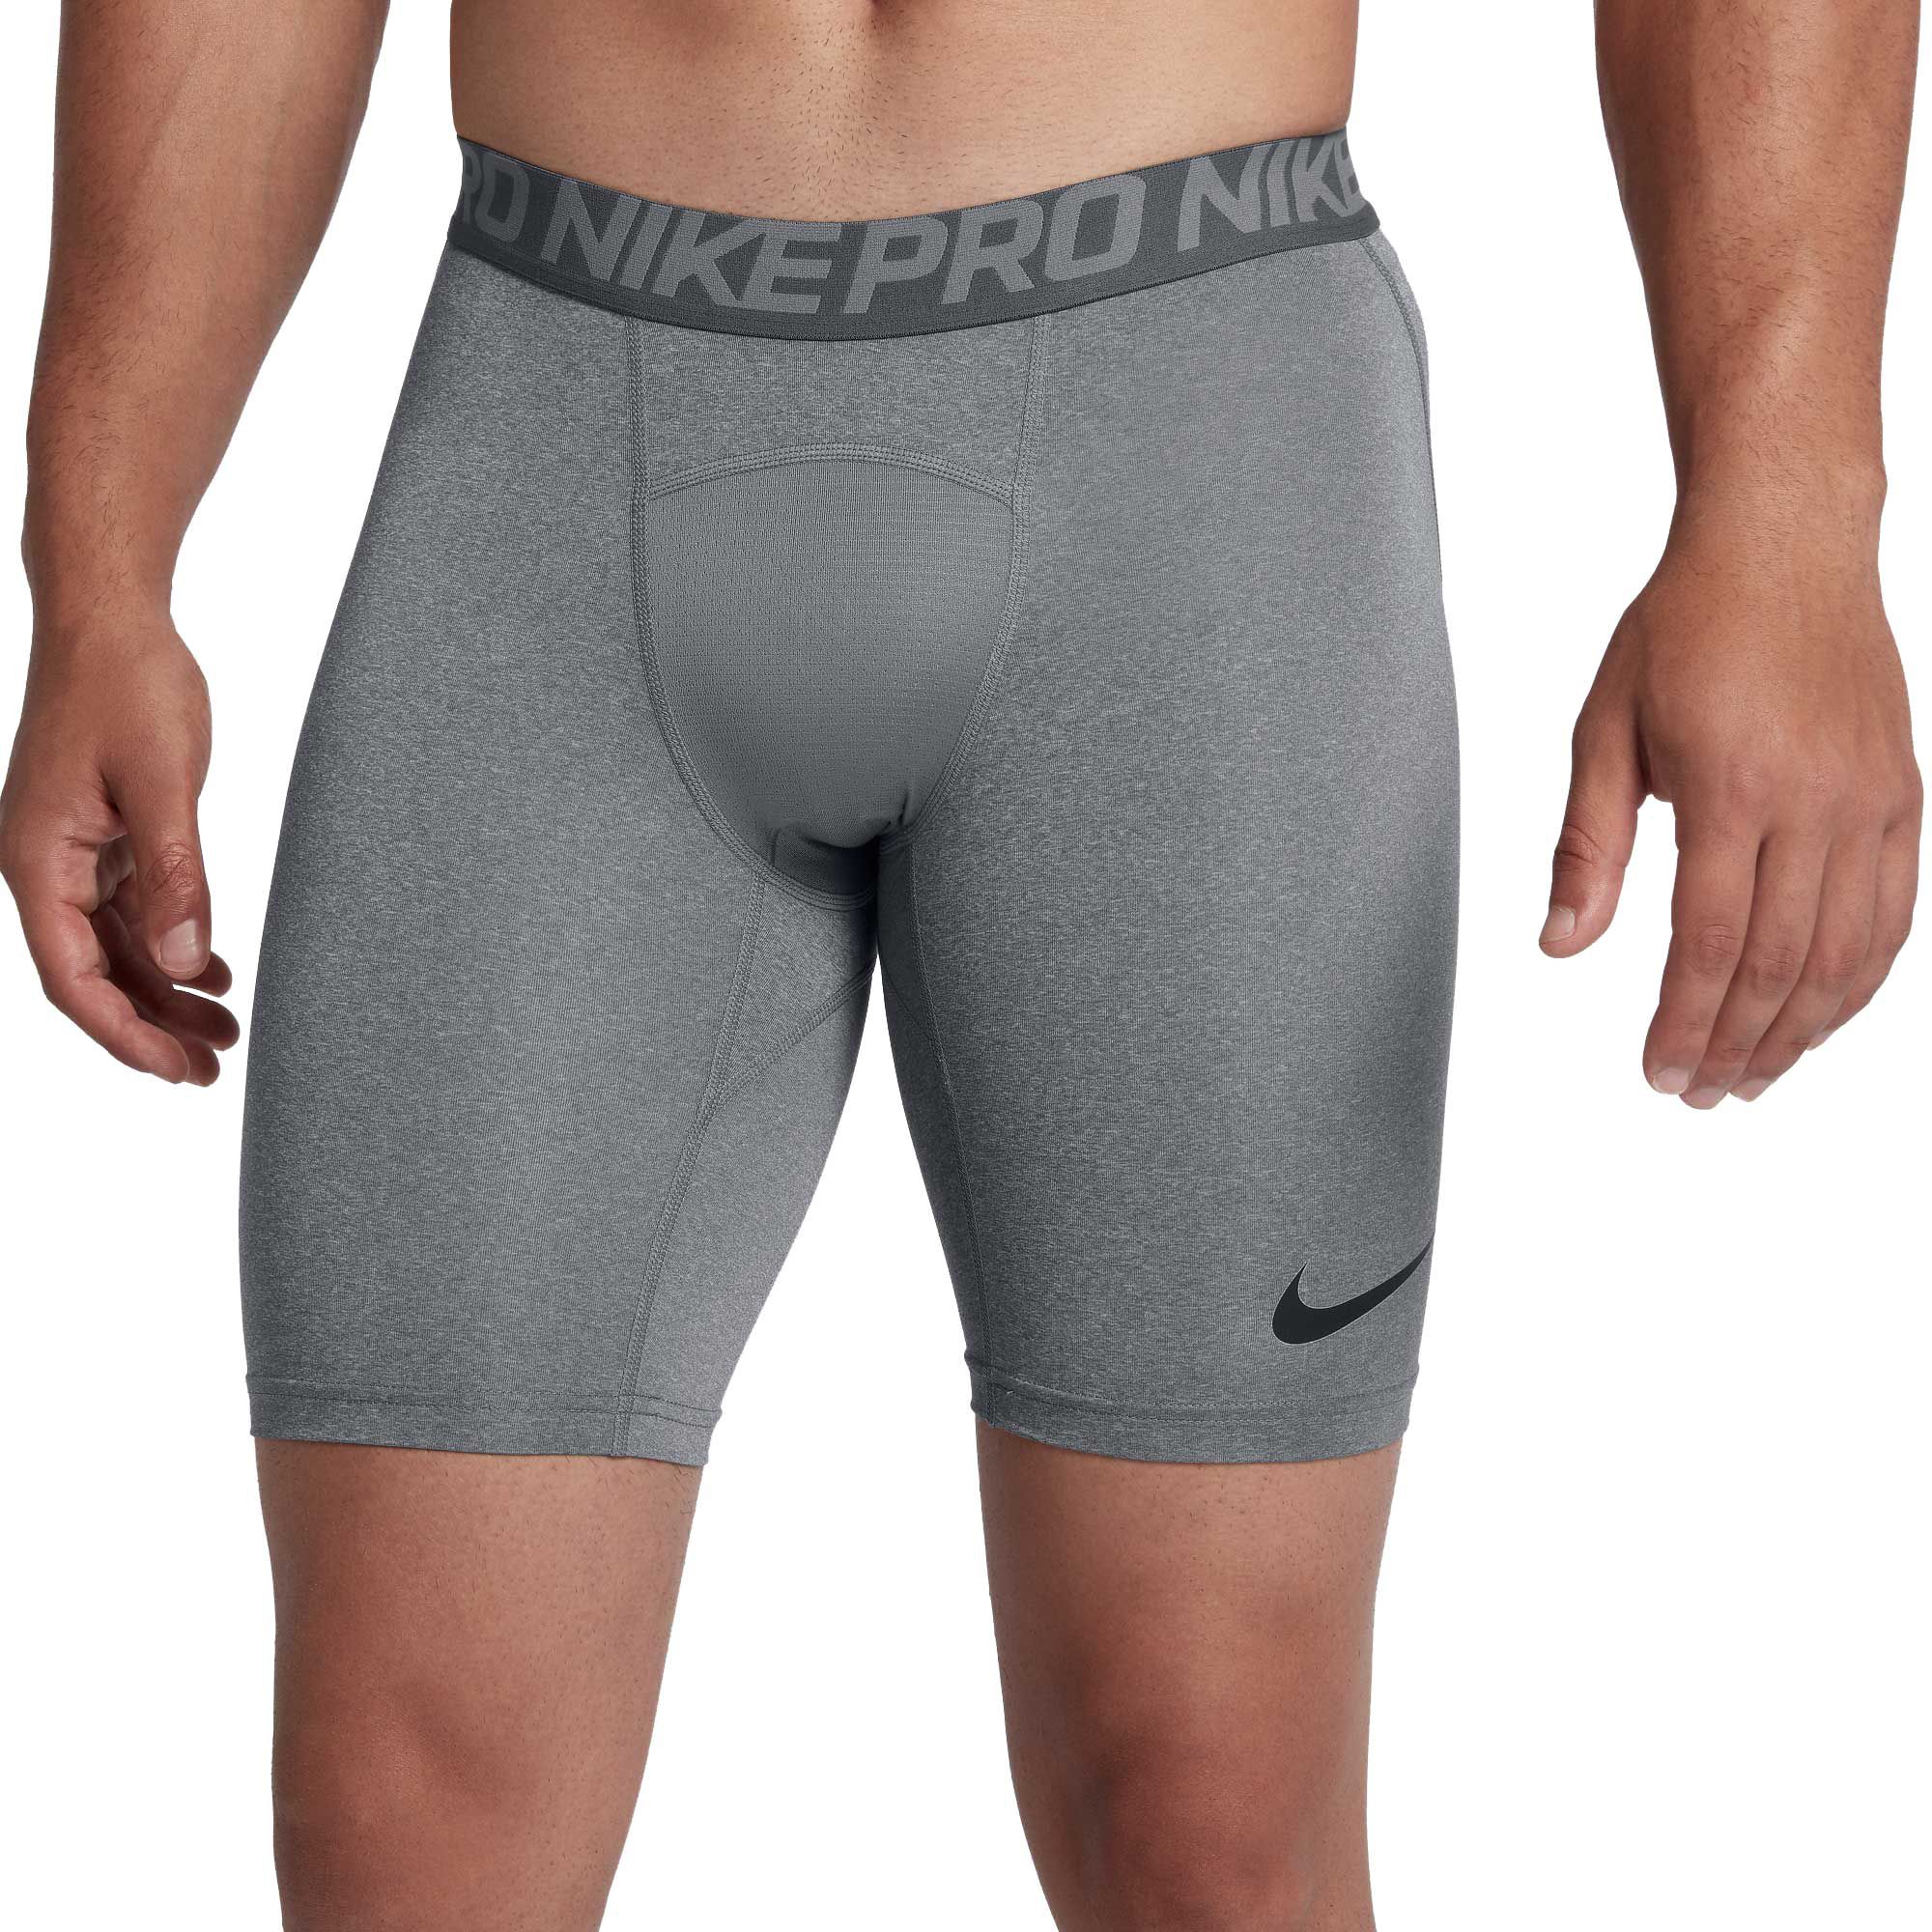 nike compression shorts sale